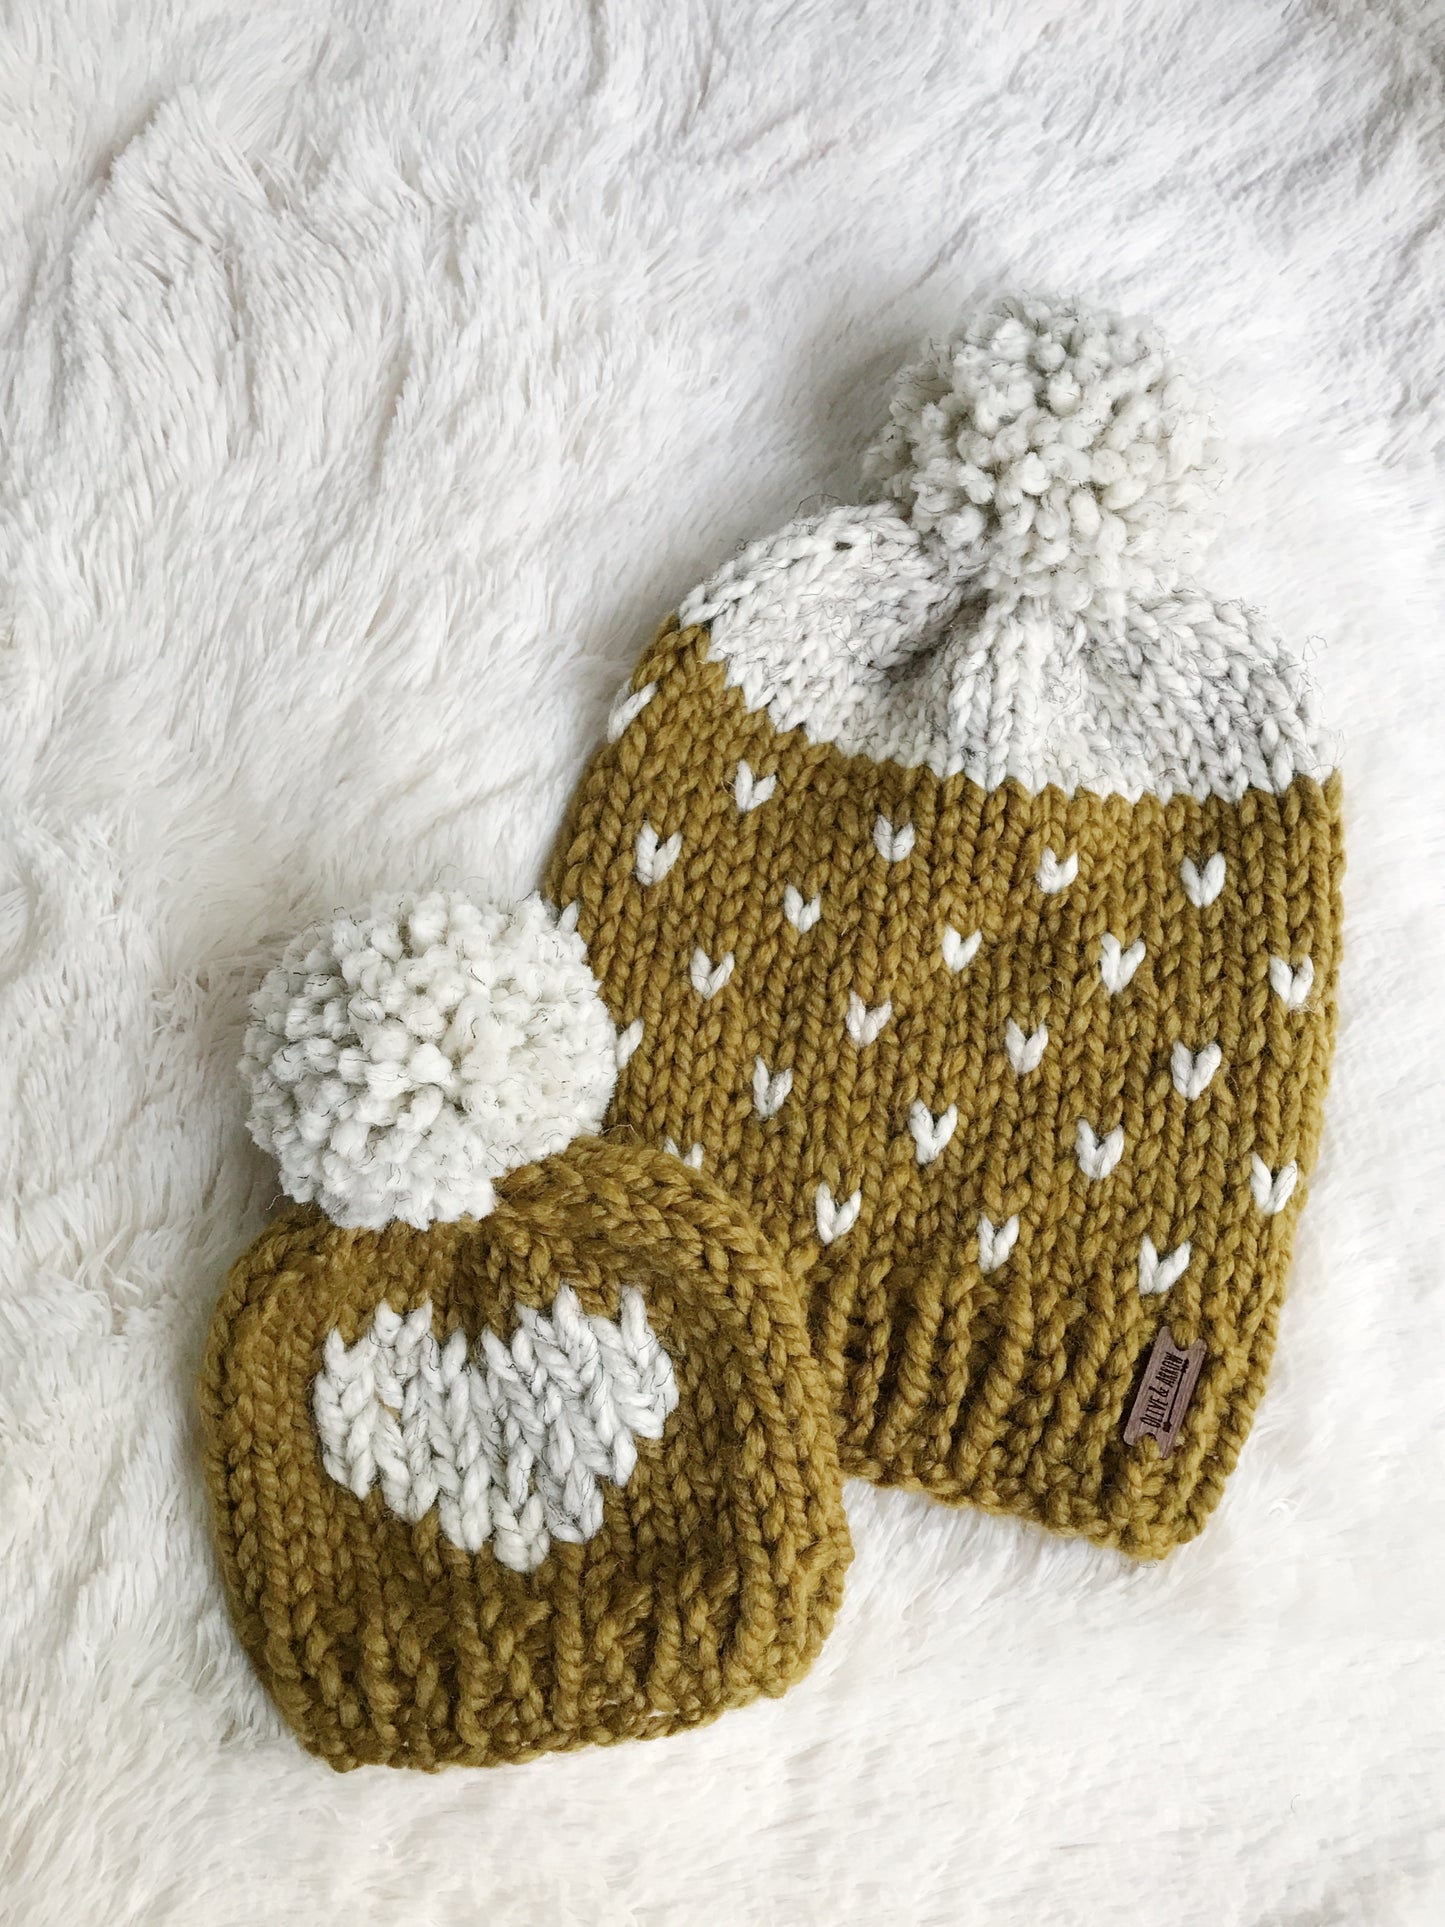 Big Heart Knit Baby Hat Beanie Handmade Yarn Pom Pom // Snapdragon